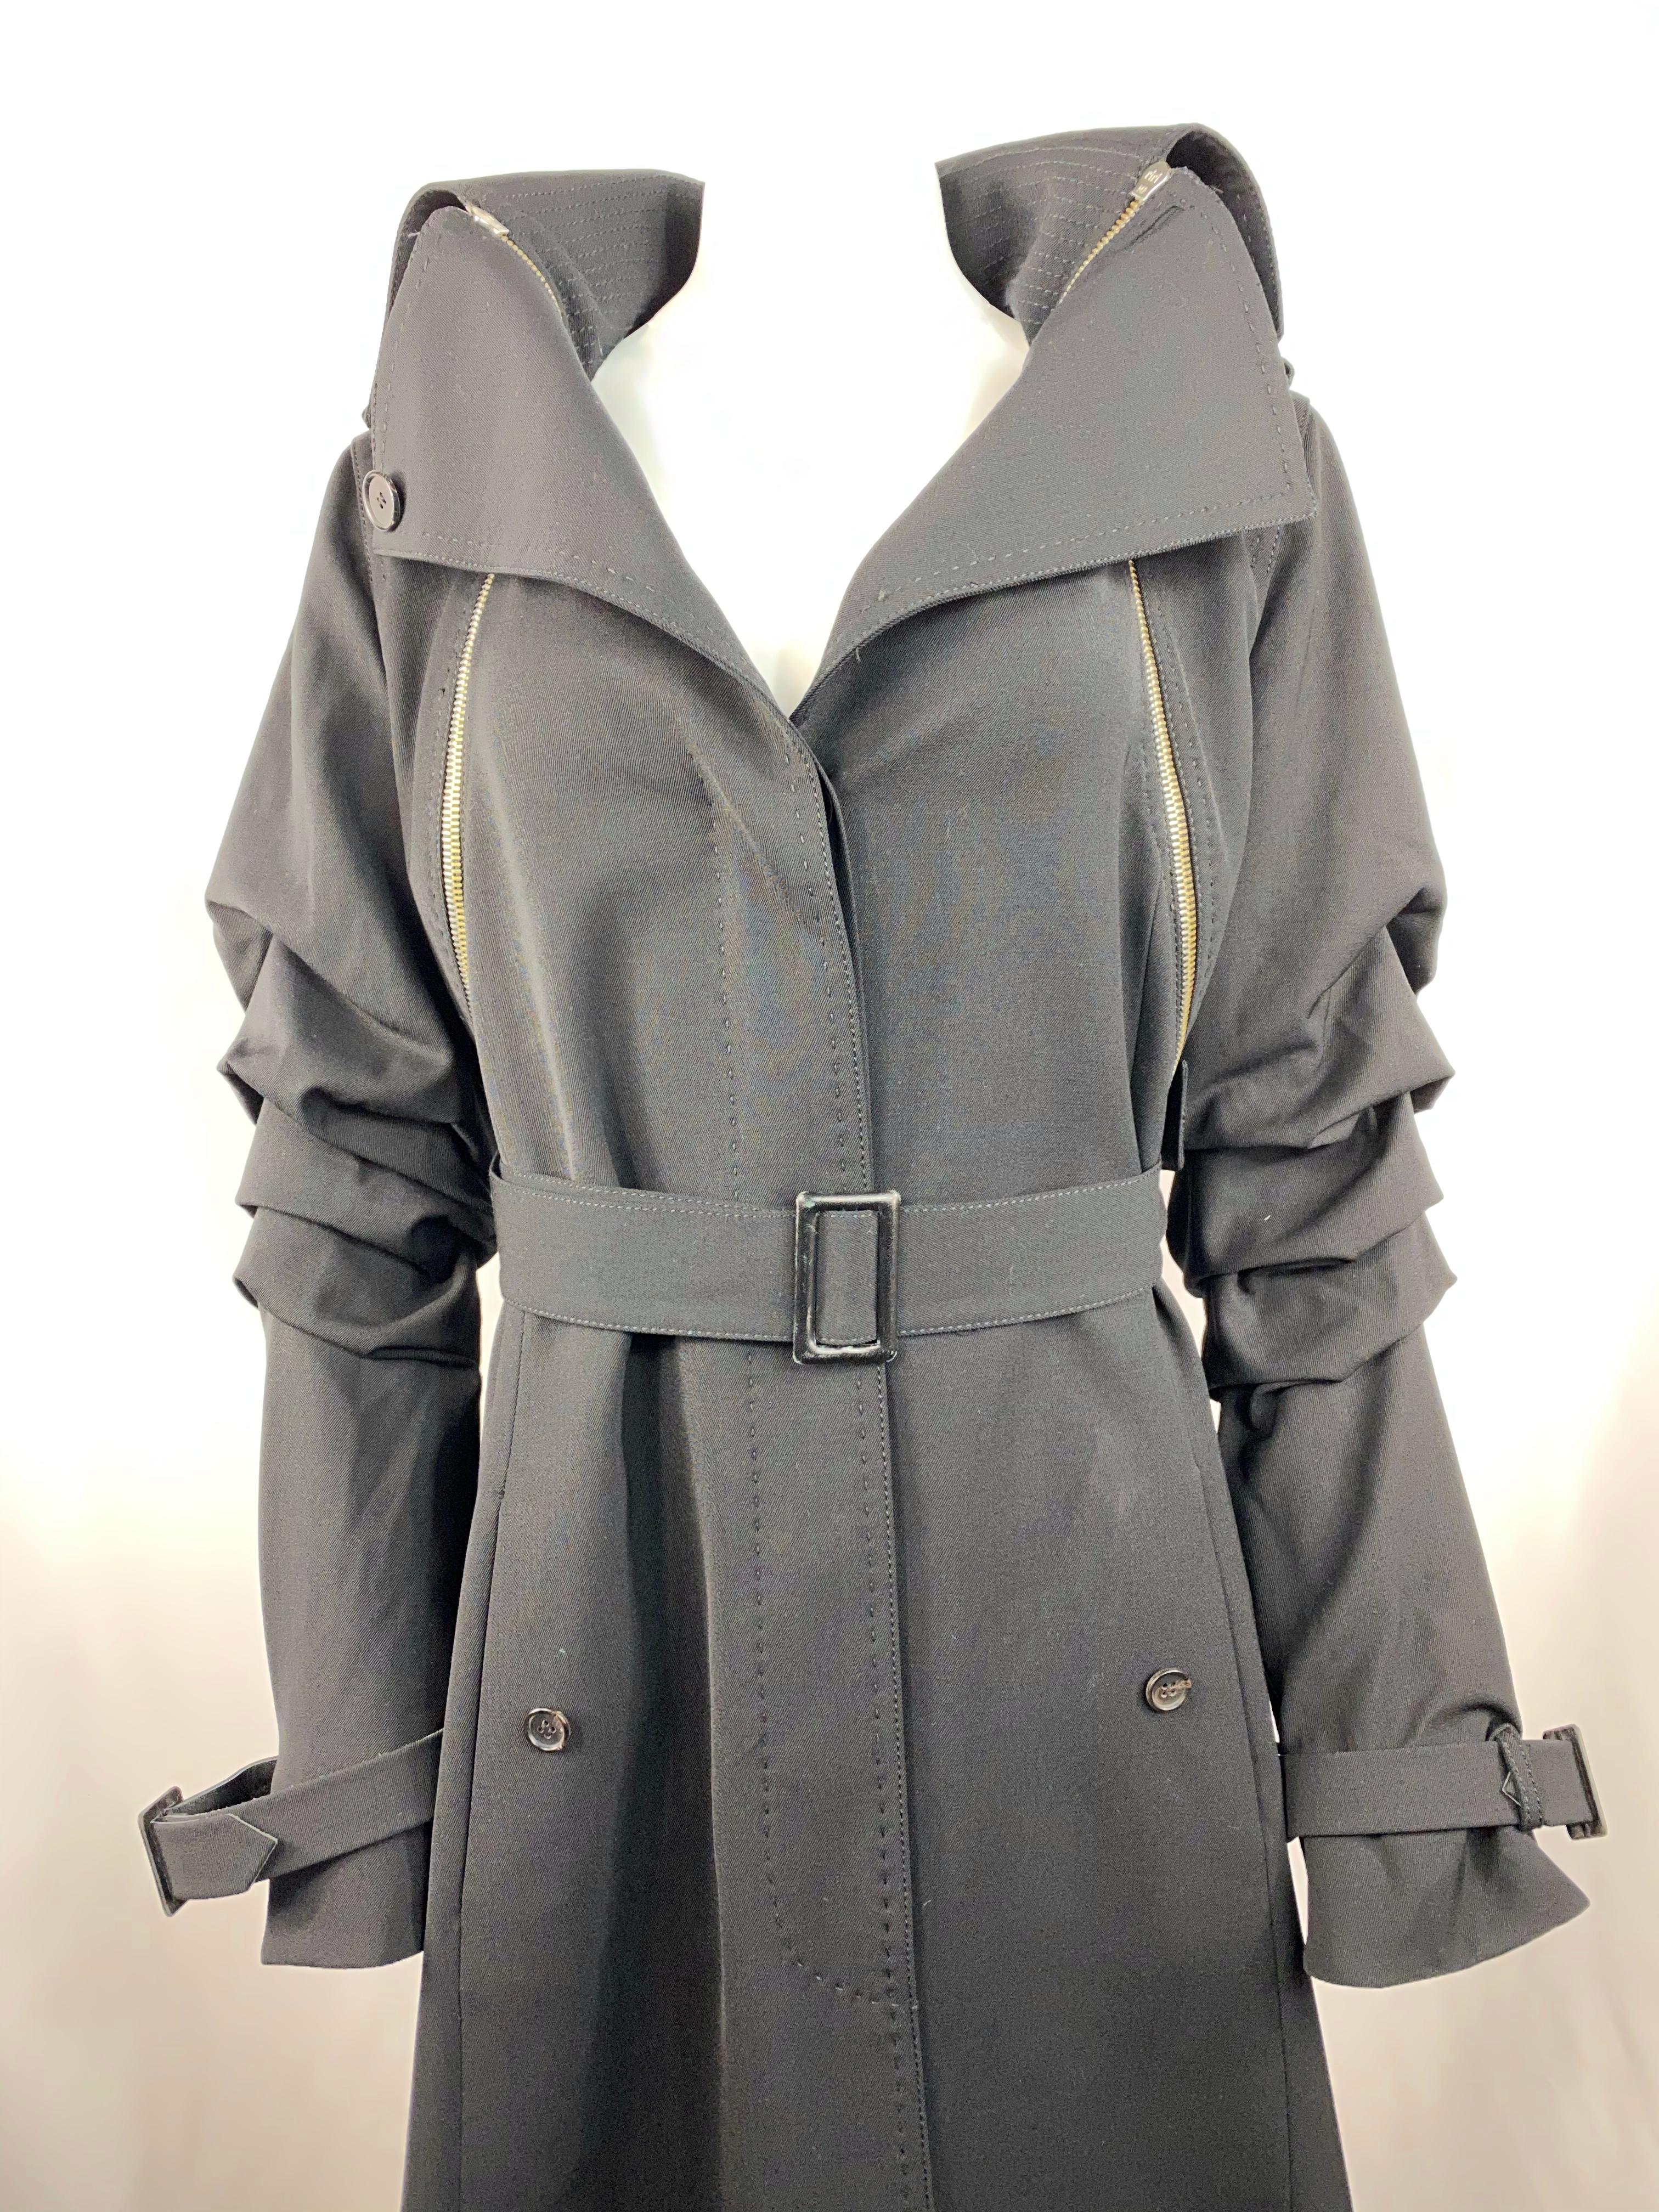 Gianfranco Ferre Black Wool Long Coat Jacket w/ Belt Size 44

Product details:
Size 44
Featuring large collar detail, measure 4